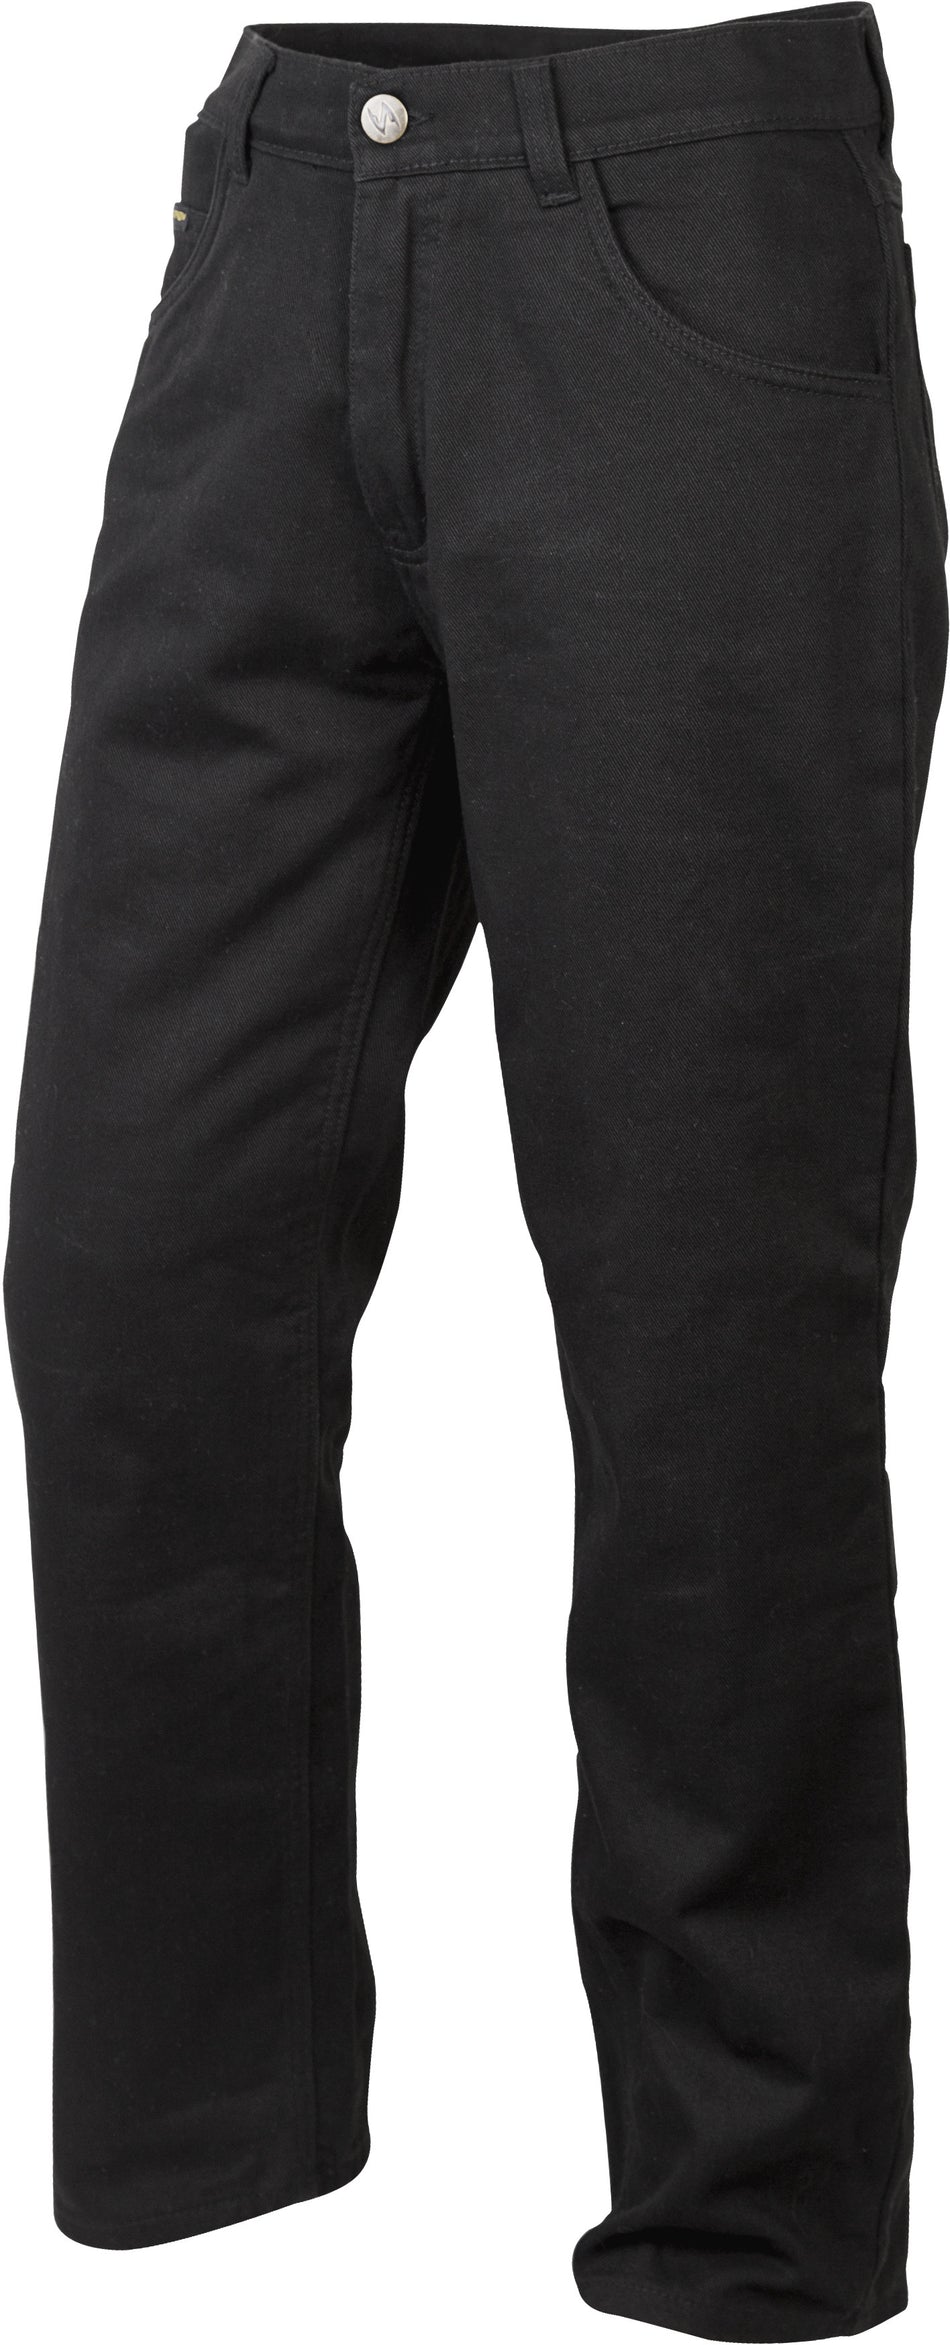 SCORPION EXO Covert Jeans Black Size 40 2503-40